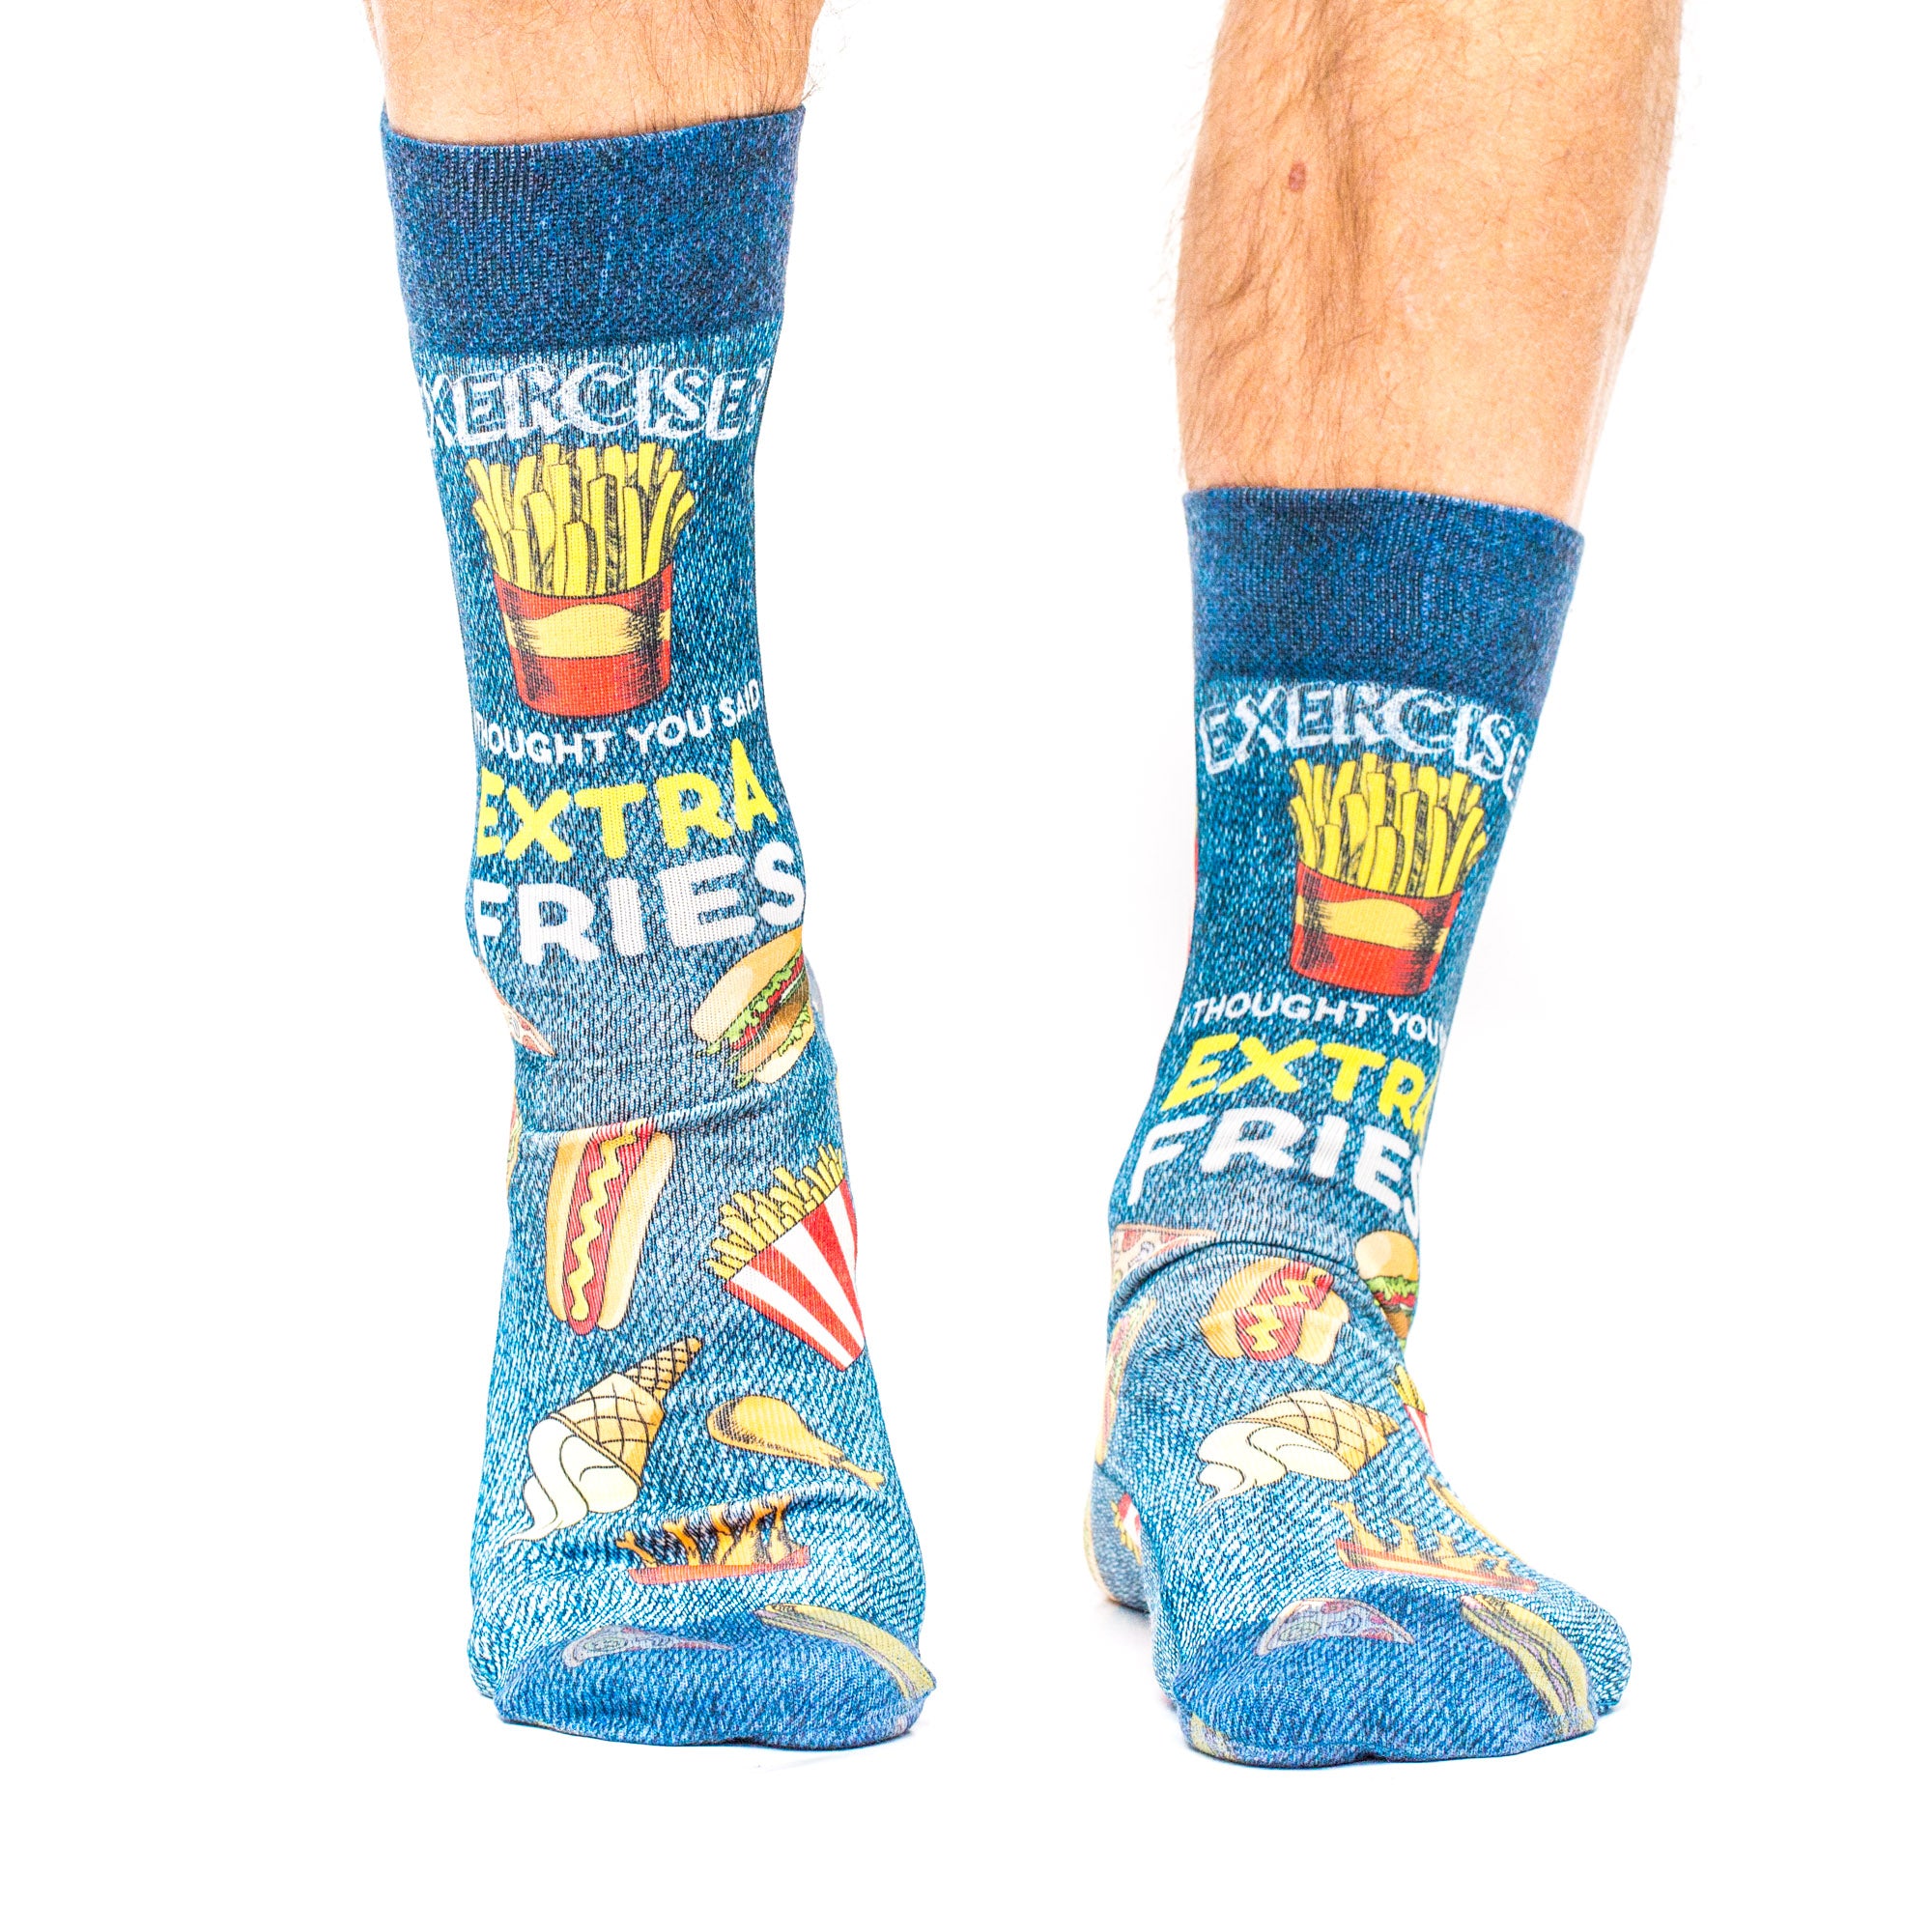 Extra Fries Man Sock